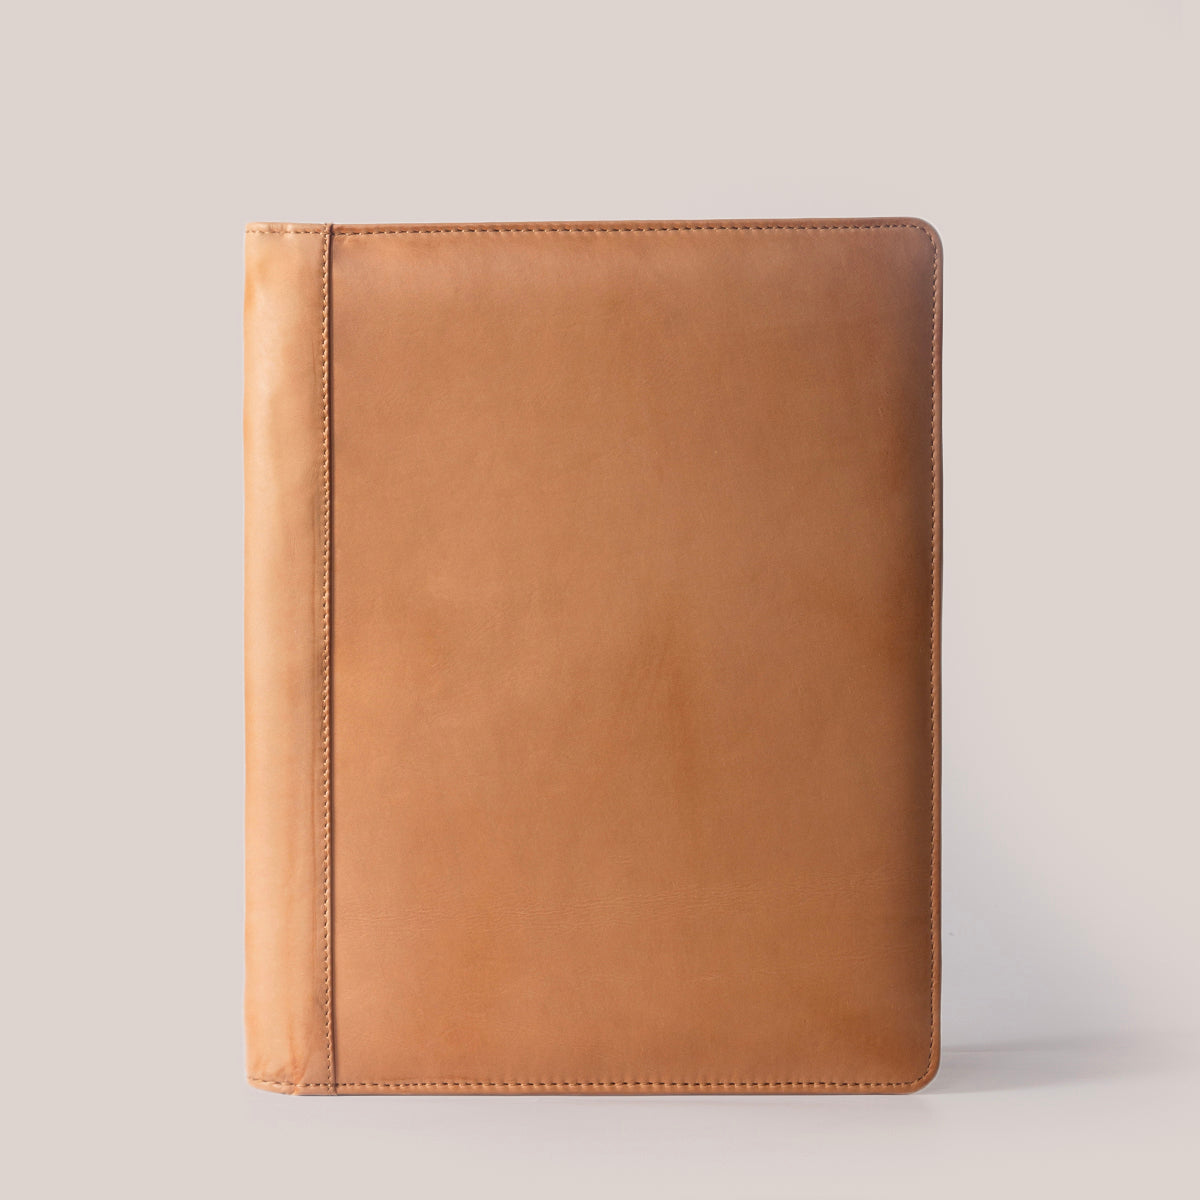 Buy Leather Portfolio Professional Organizer Padfolio